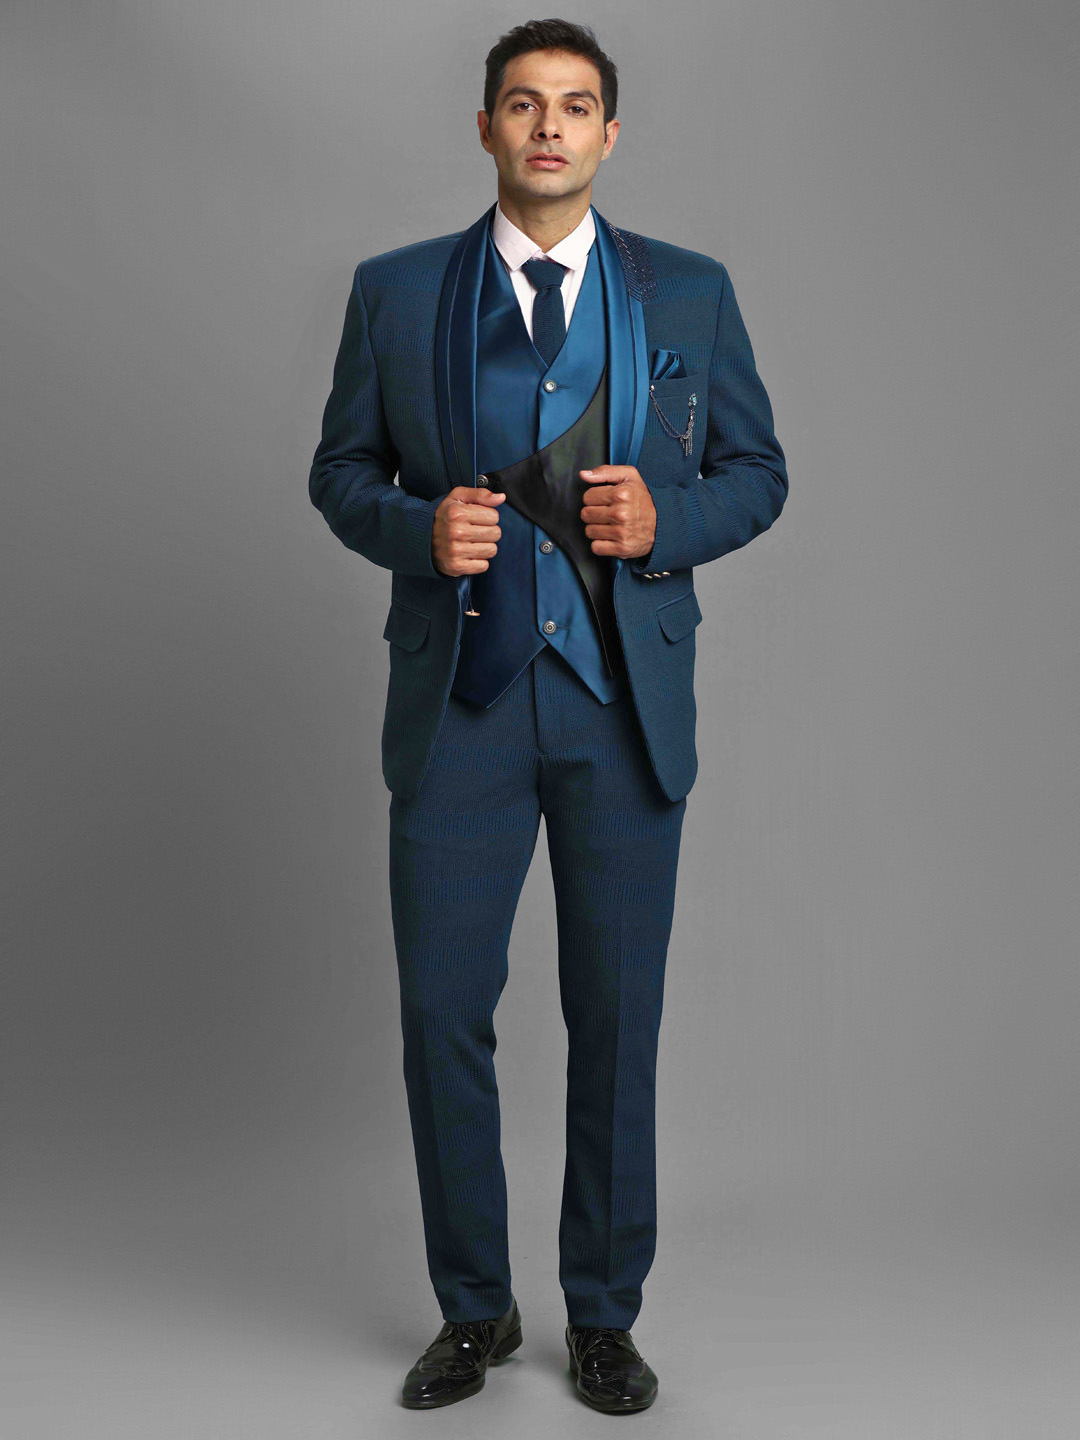 peacock-blue-shiny-textured-print-3-piece-suit